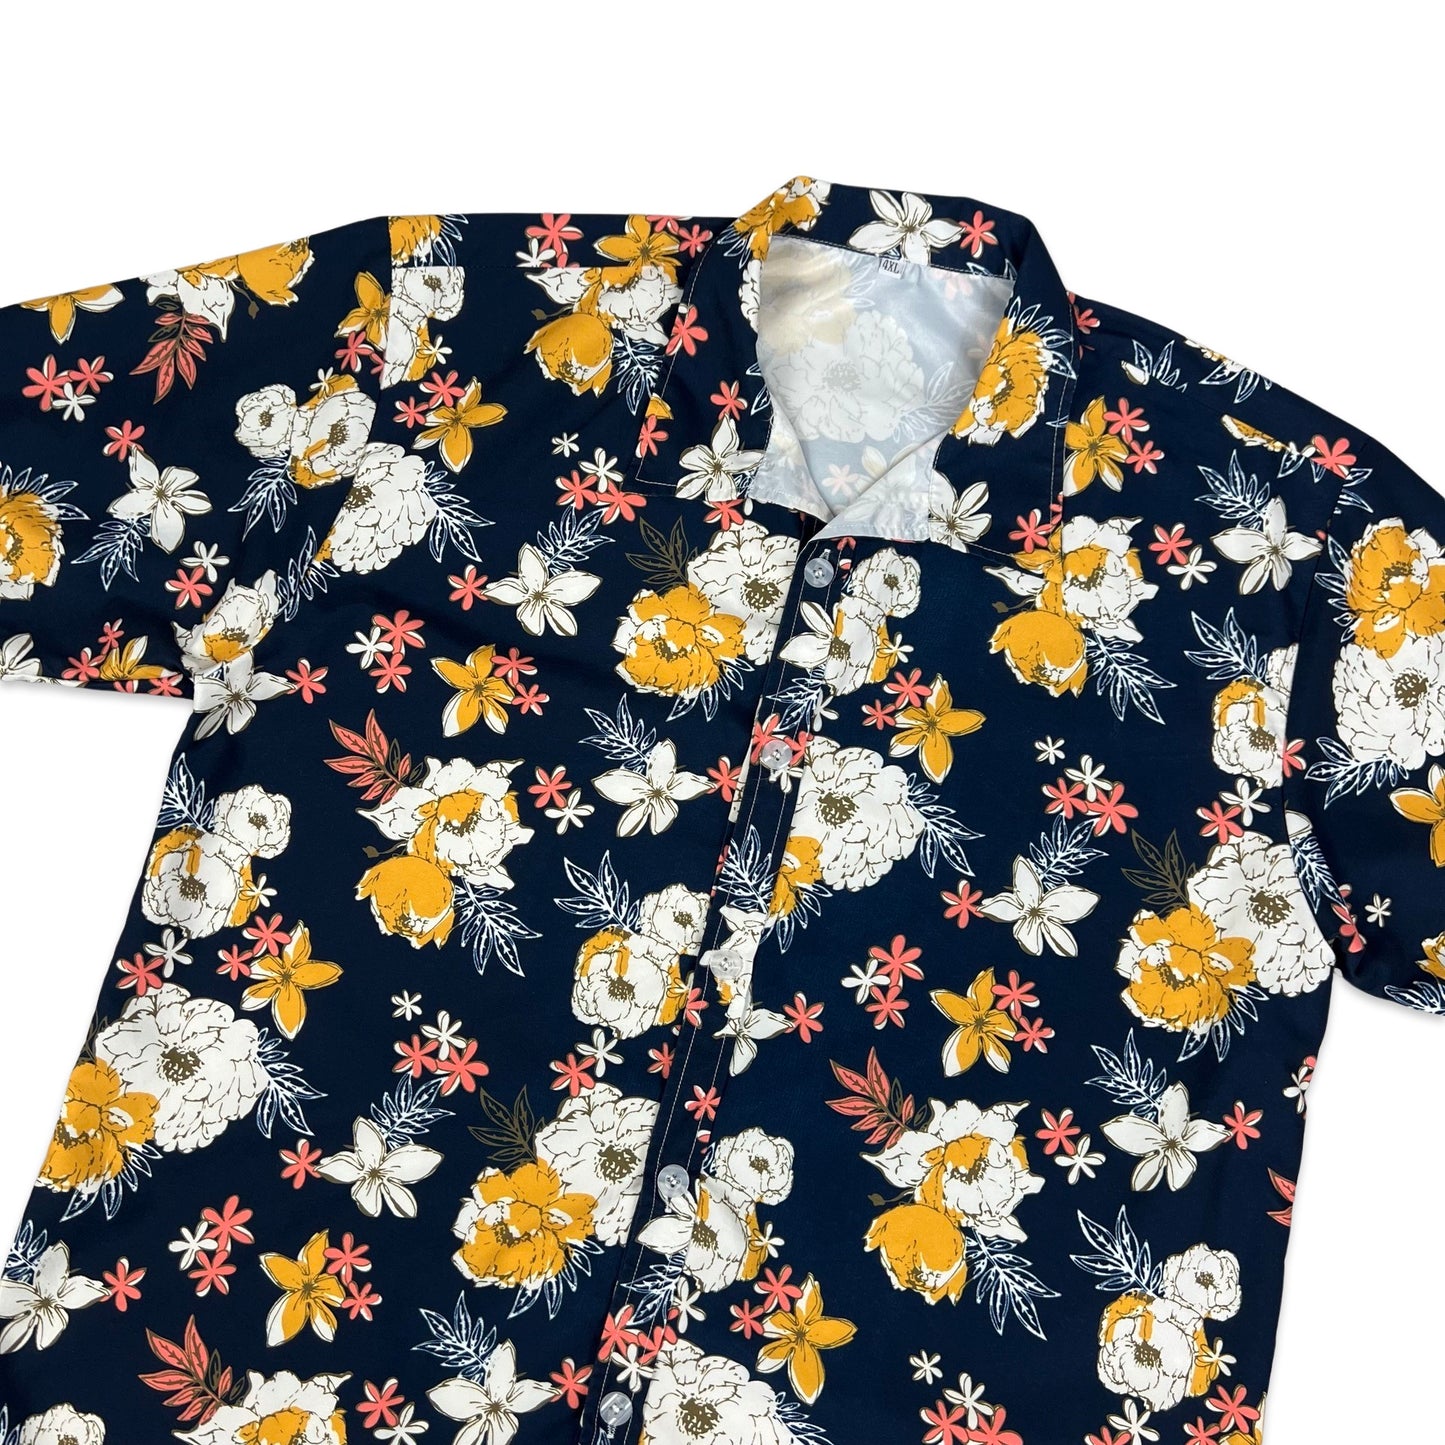 Vintage Floral Print Navy Yellow & White Short Sleeve Shirt M L